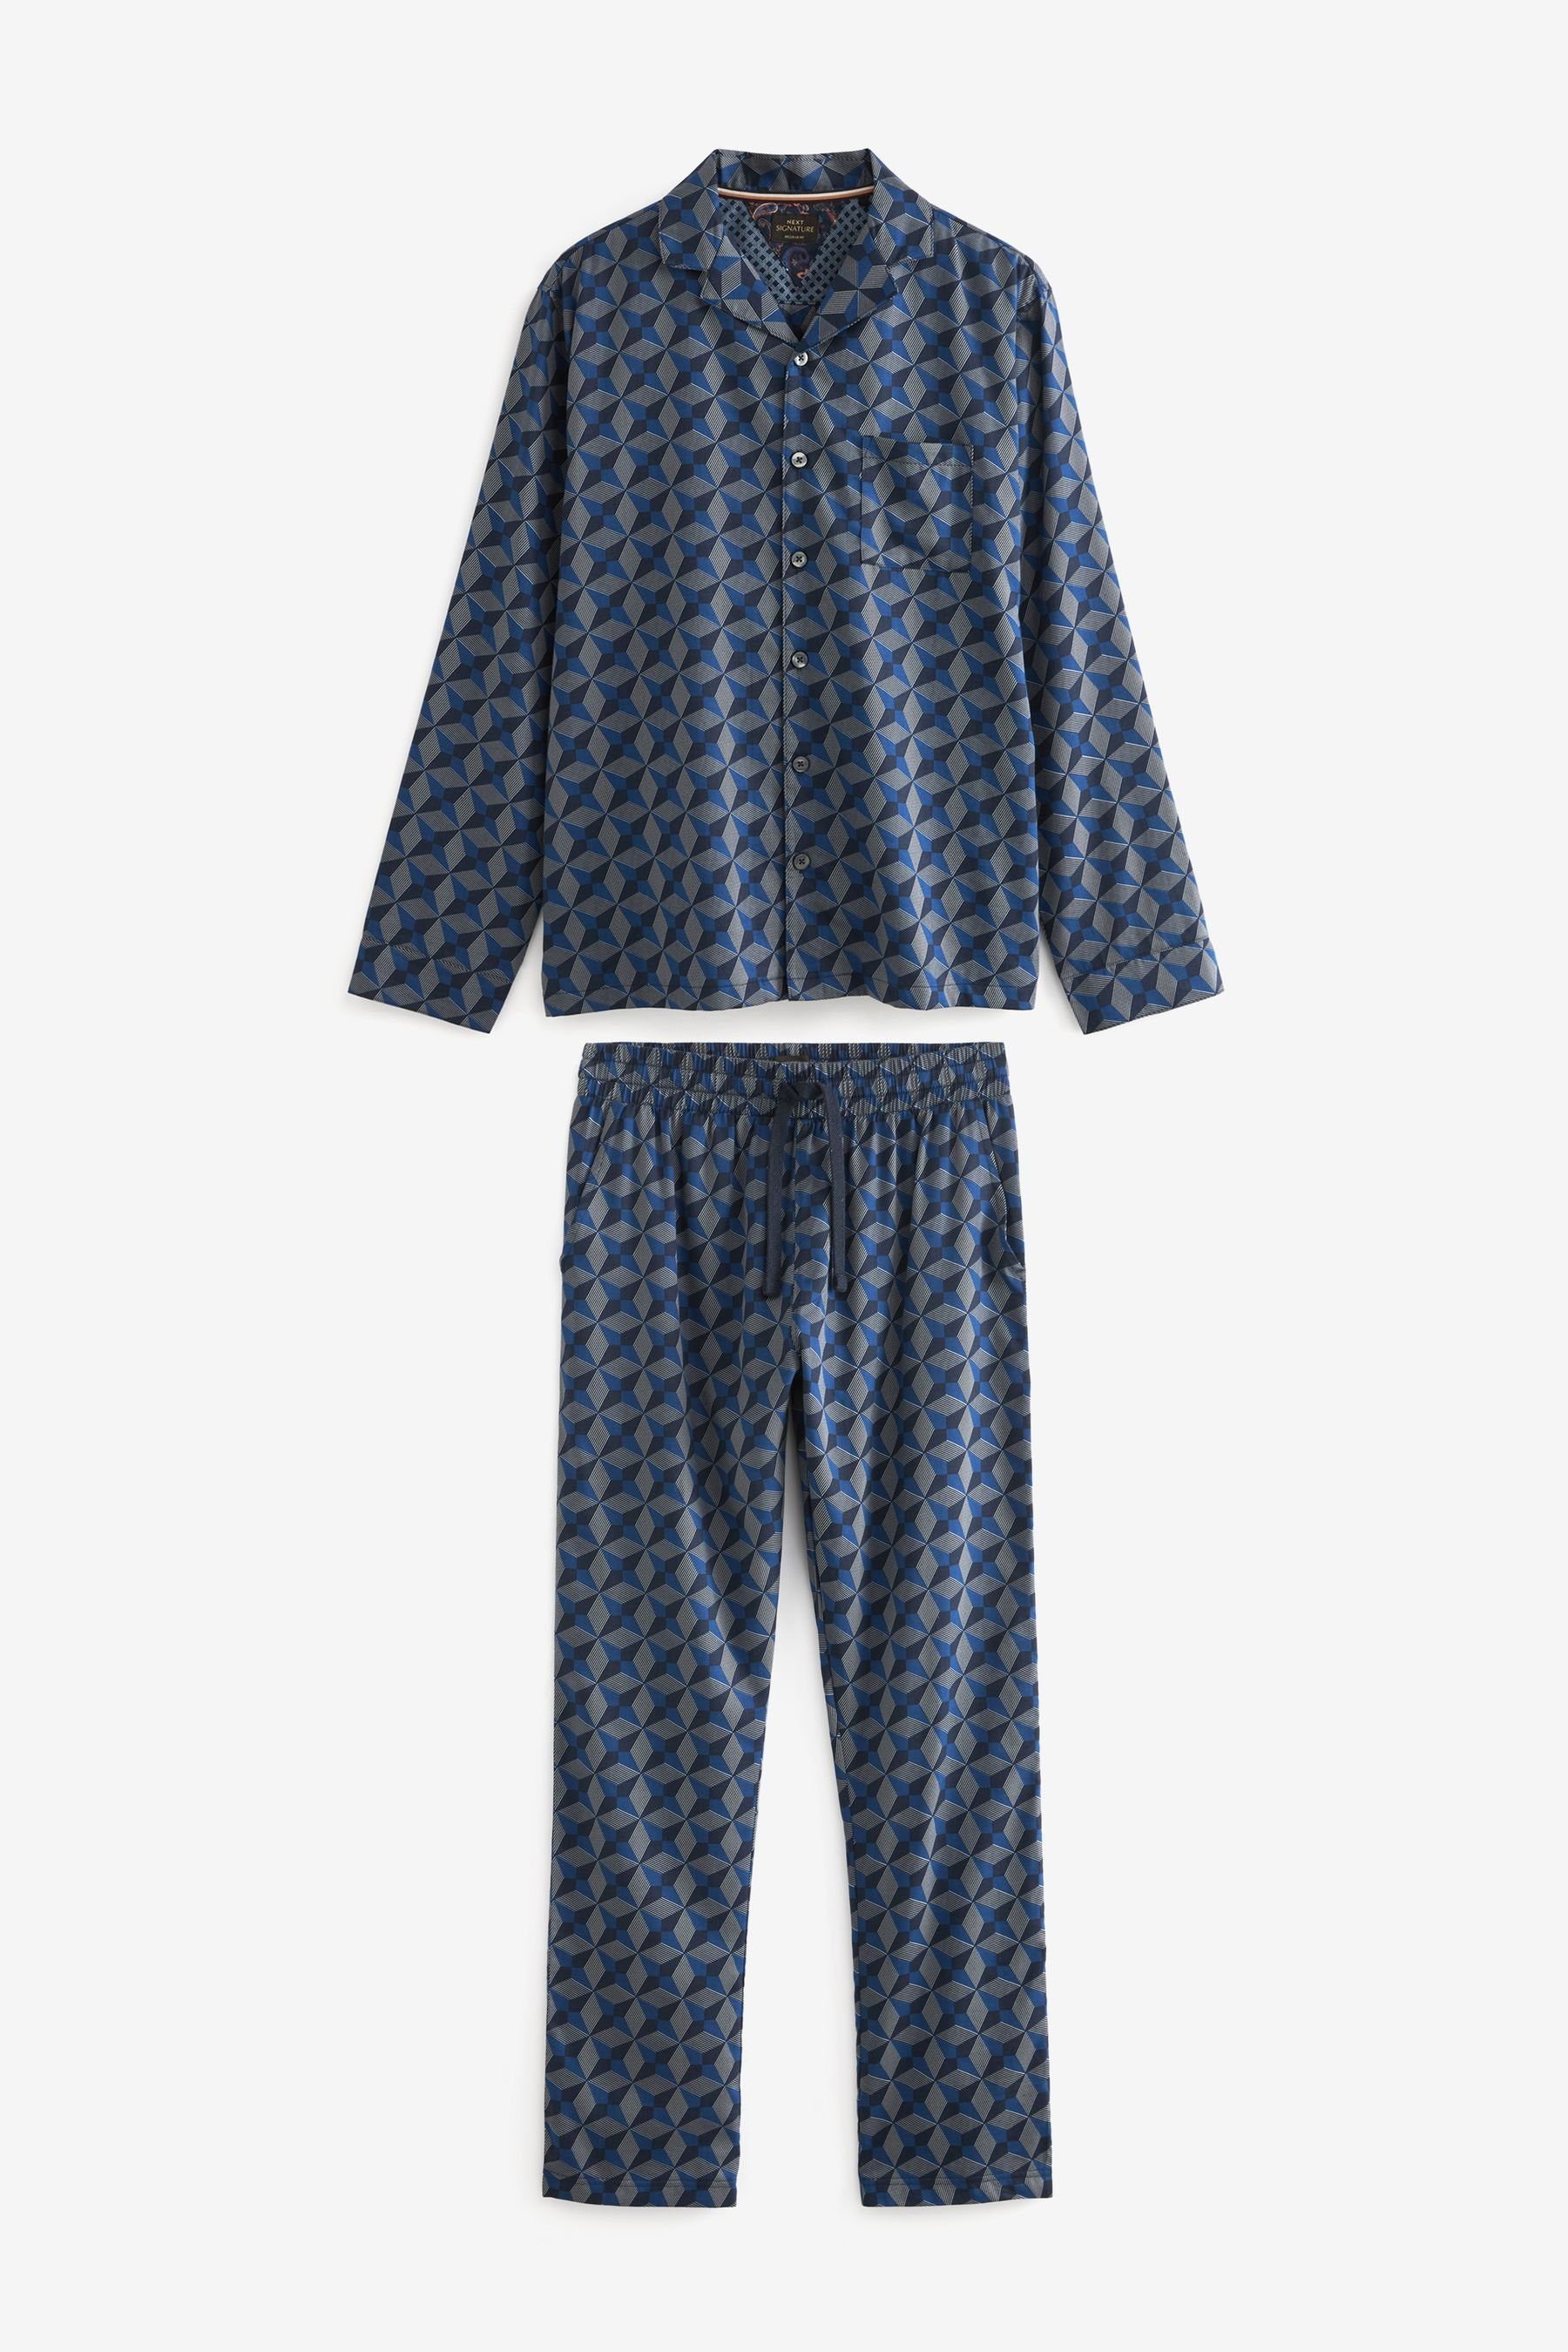 Next Pyjama Traditioneller Signature Schlafanzug mit Print (2 tlg)